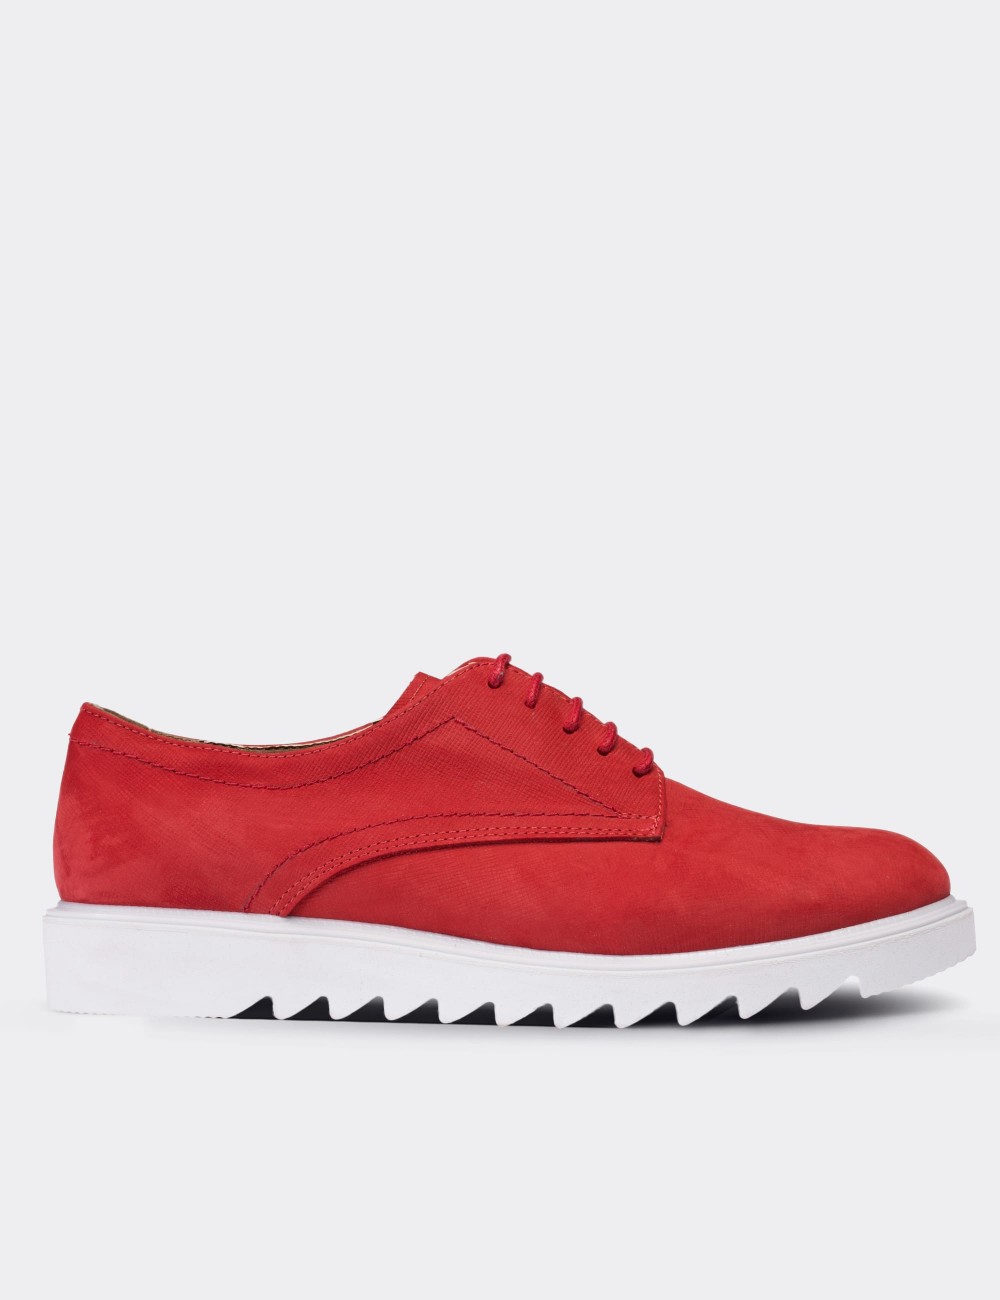 Red Nubuck Leather Lace-up Shoes - 01430ZKRMP03